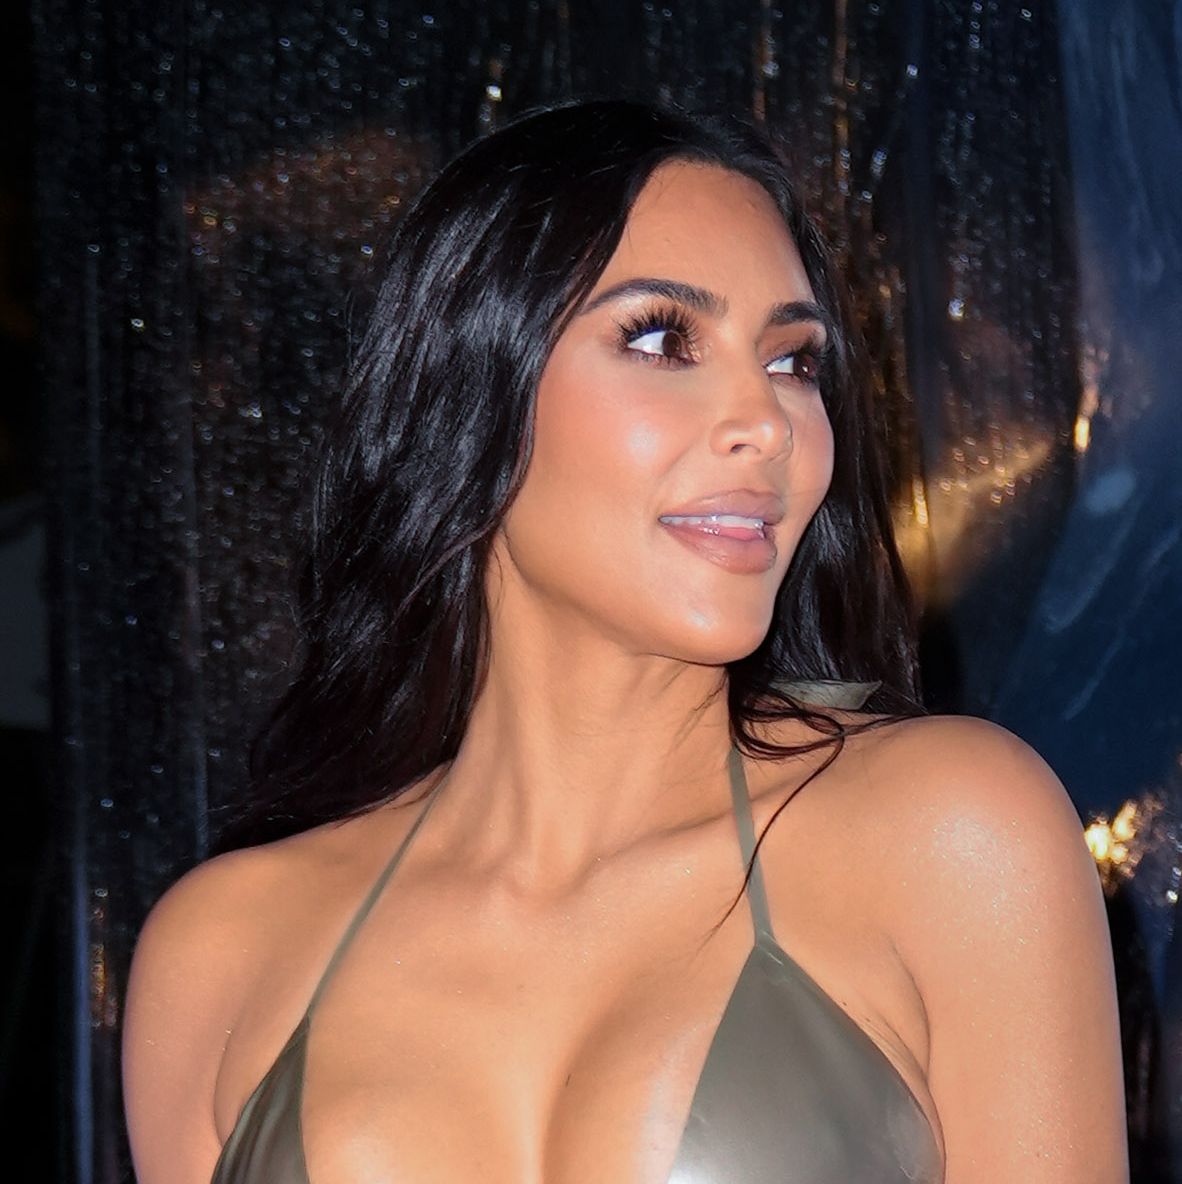 cheryl lundgren recommends Kim Kardashian Xxx Free